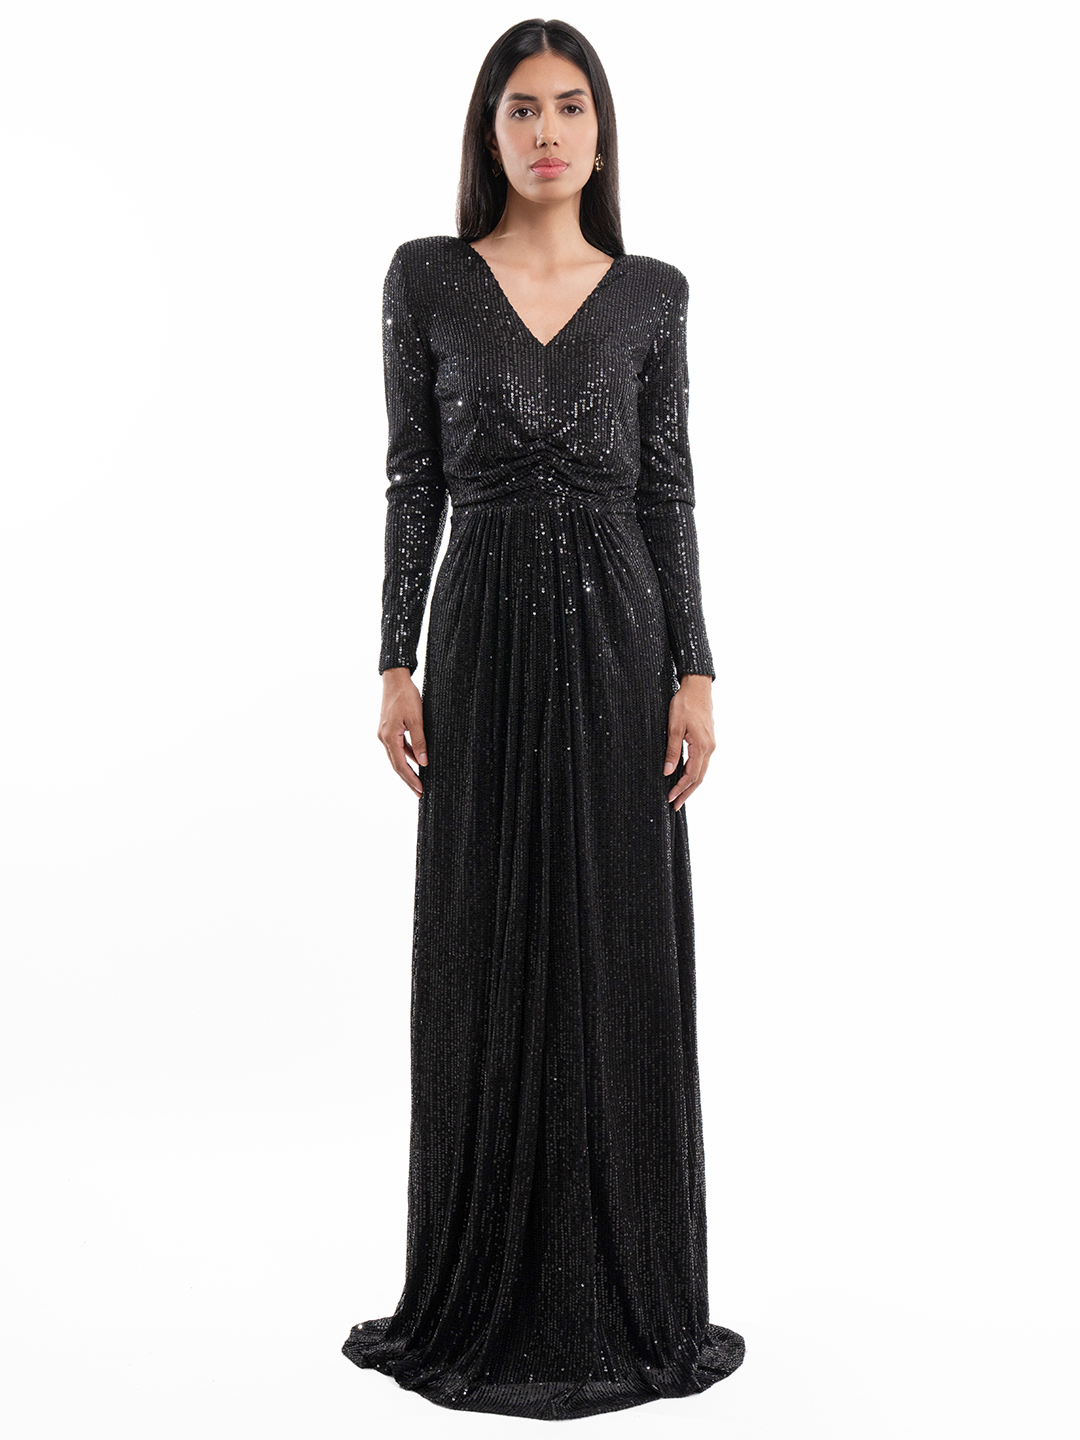 Dazzle In Divine Black Dress - Front